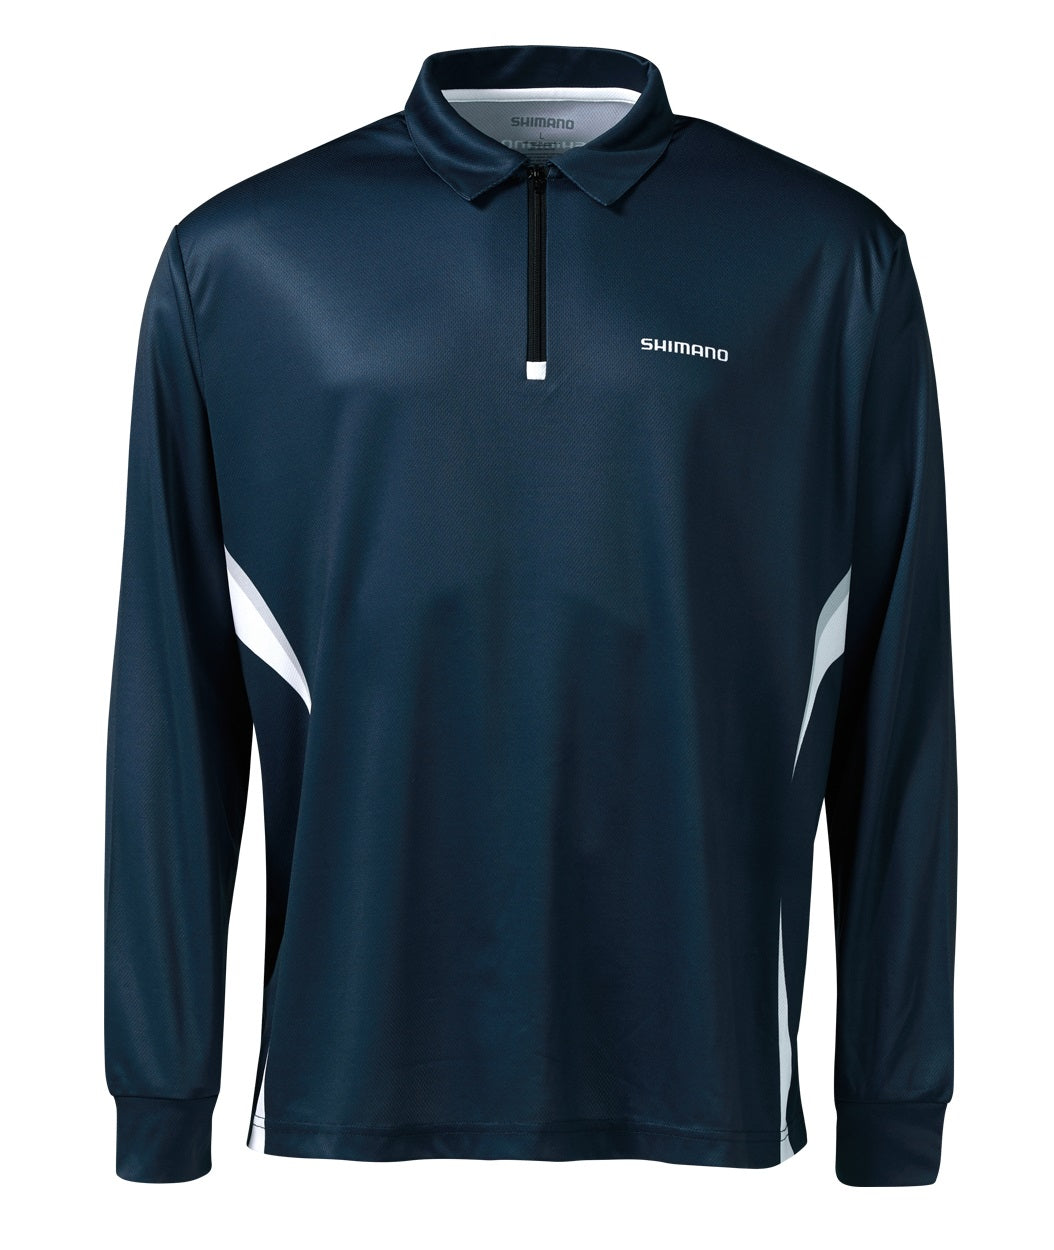 Shimano Zip Sublimated Long Sleeve Fishing Jersey Shirt - Navy